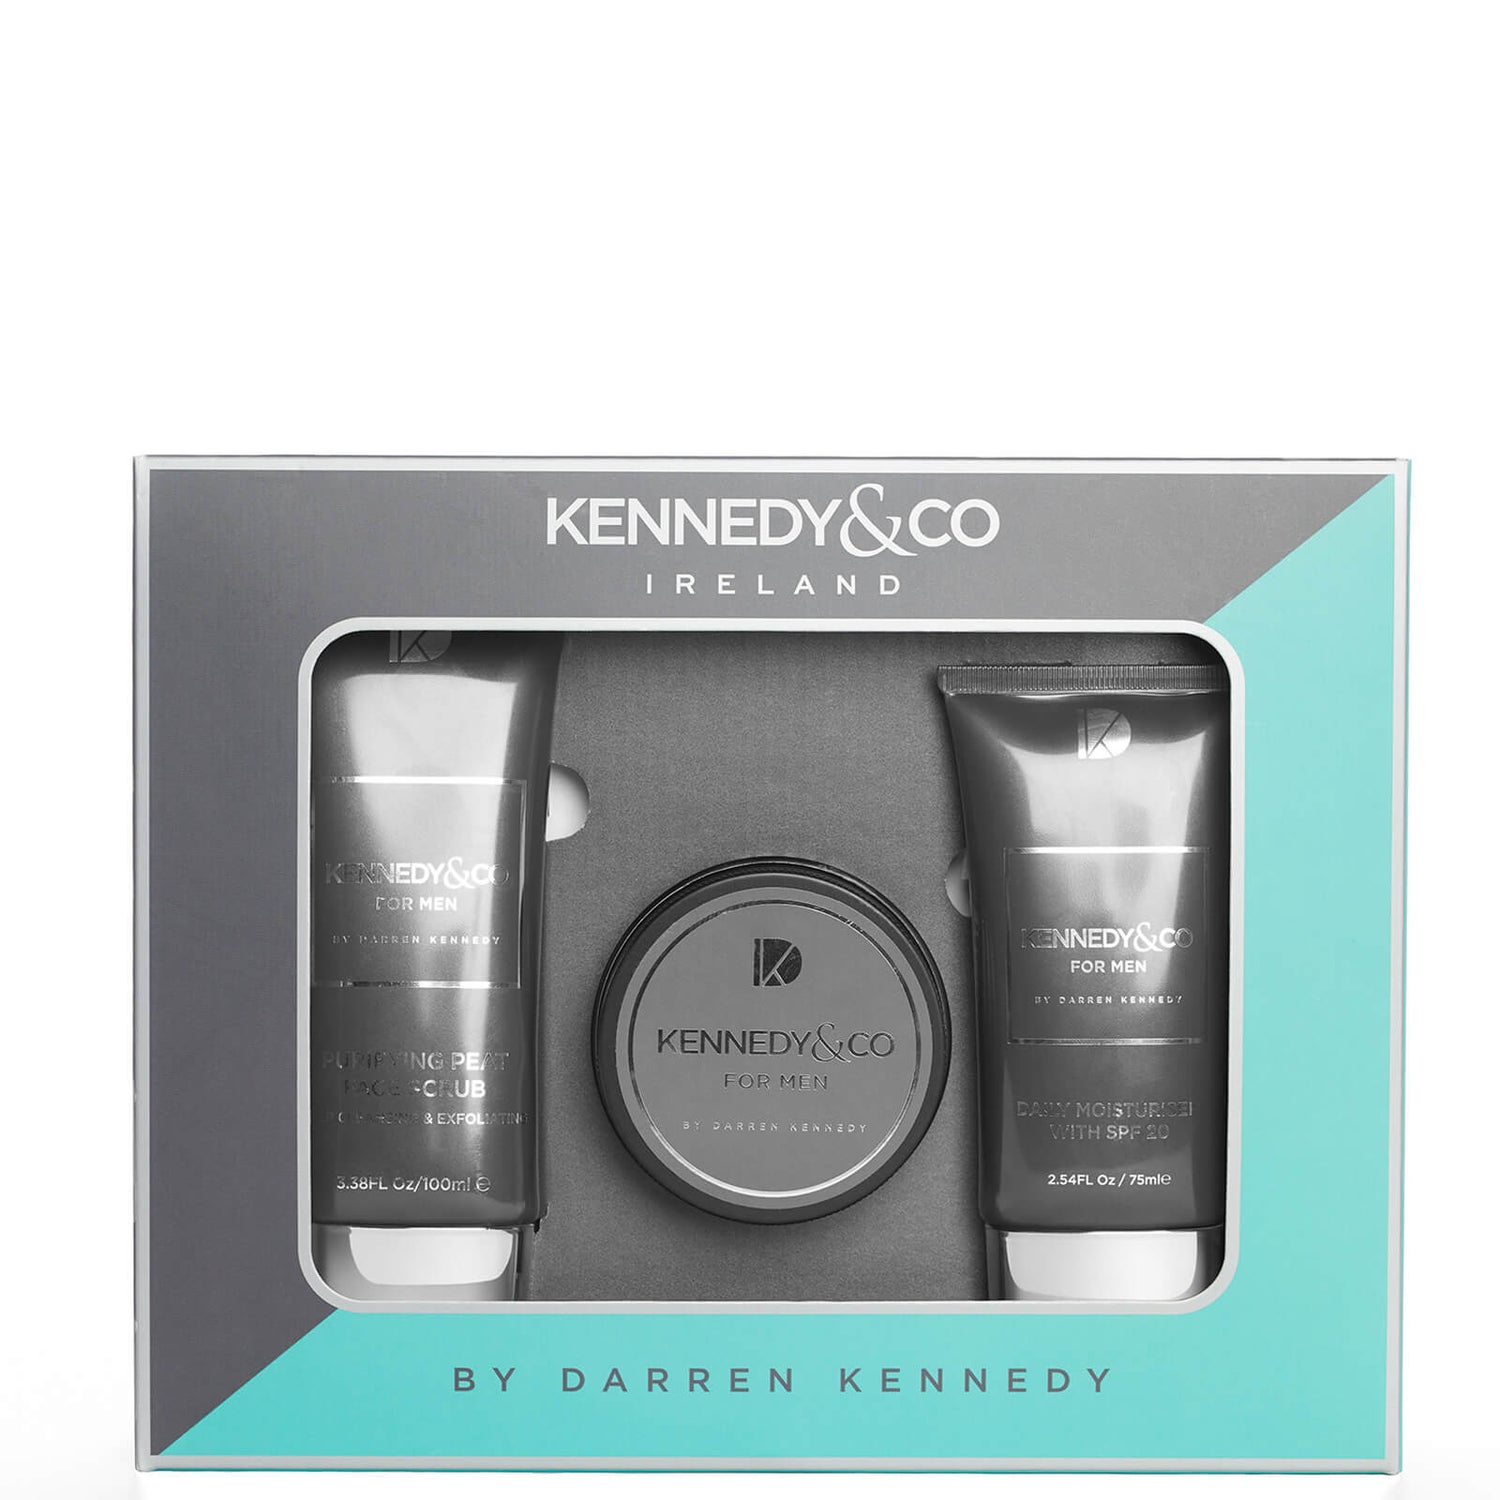 Kennedy & Co Gift Set 1 Trio